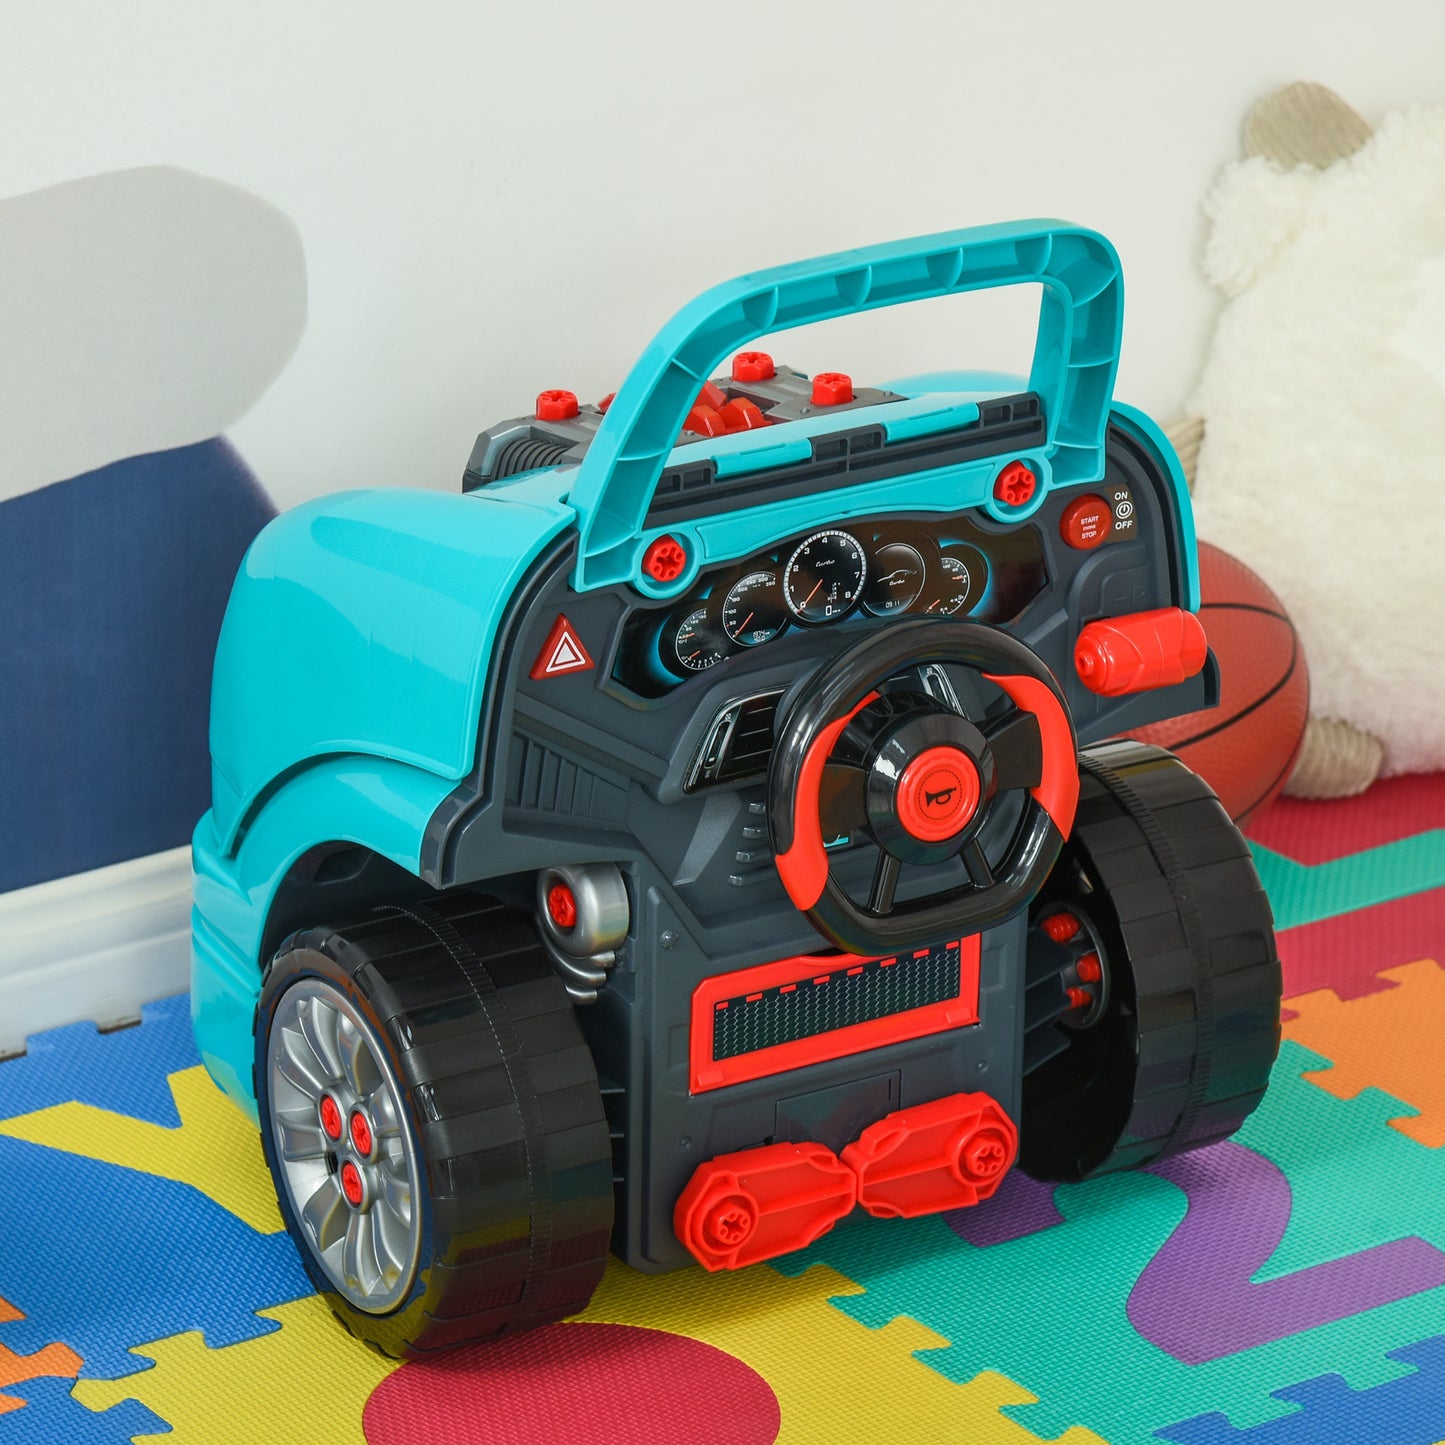 HOMCOM Kids Truck Engine Toy Set, Educational Car Service Station Playset, Take Apart Workshop, w/ Steering Wheel, Horn, Light, RC Car Key, for 3-5 Years Old Teal Green Set Key